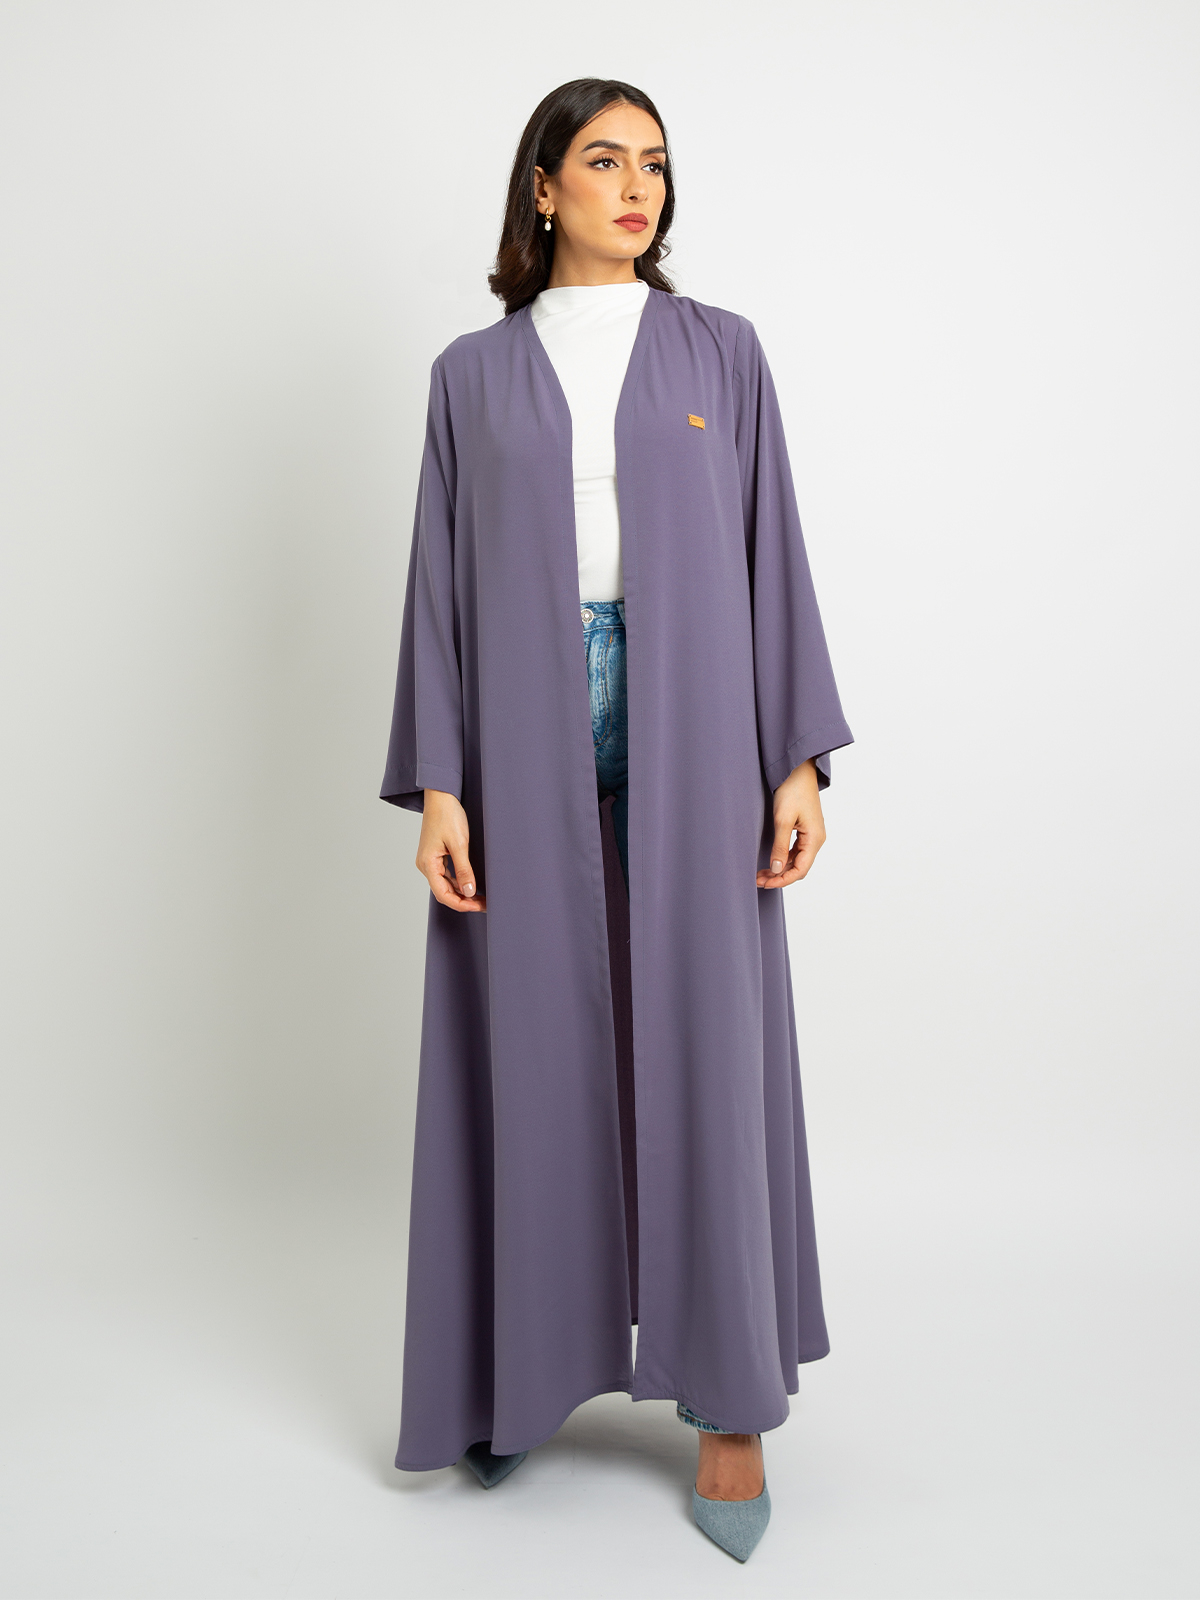 Lavender - A Cut Long Open Half Cloche Abaya in Light Fabric